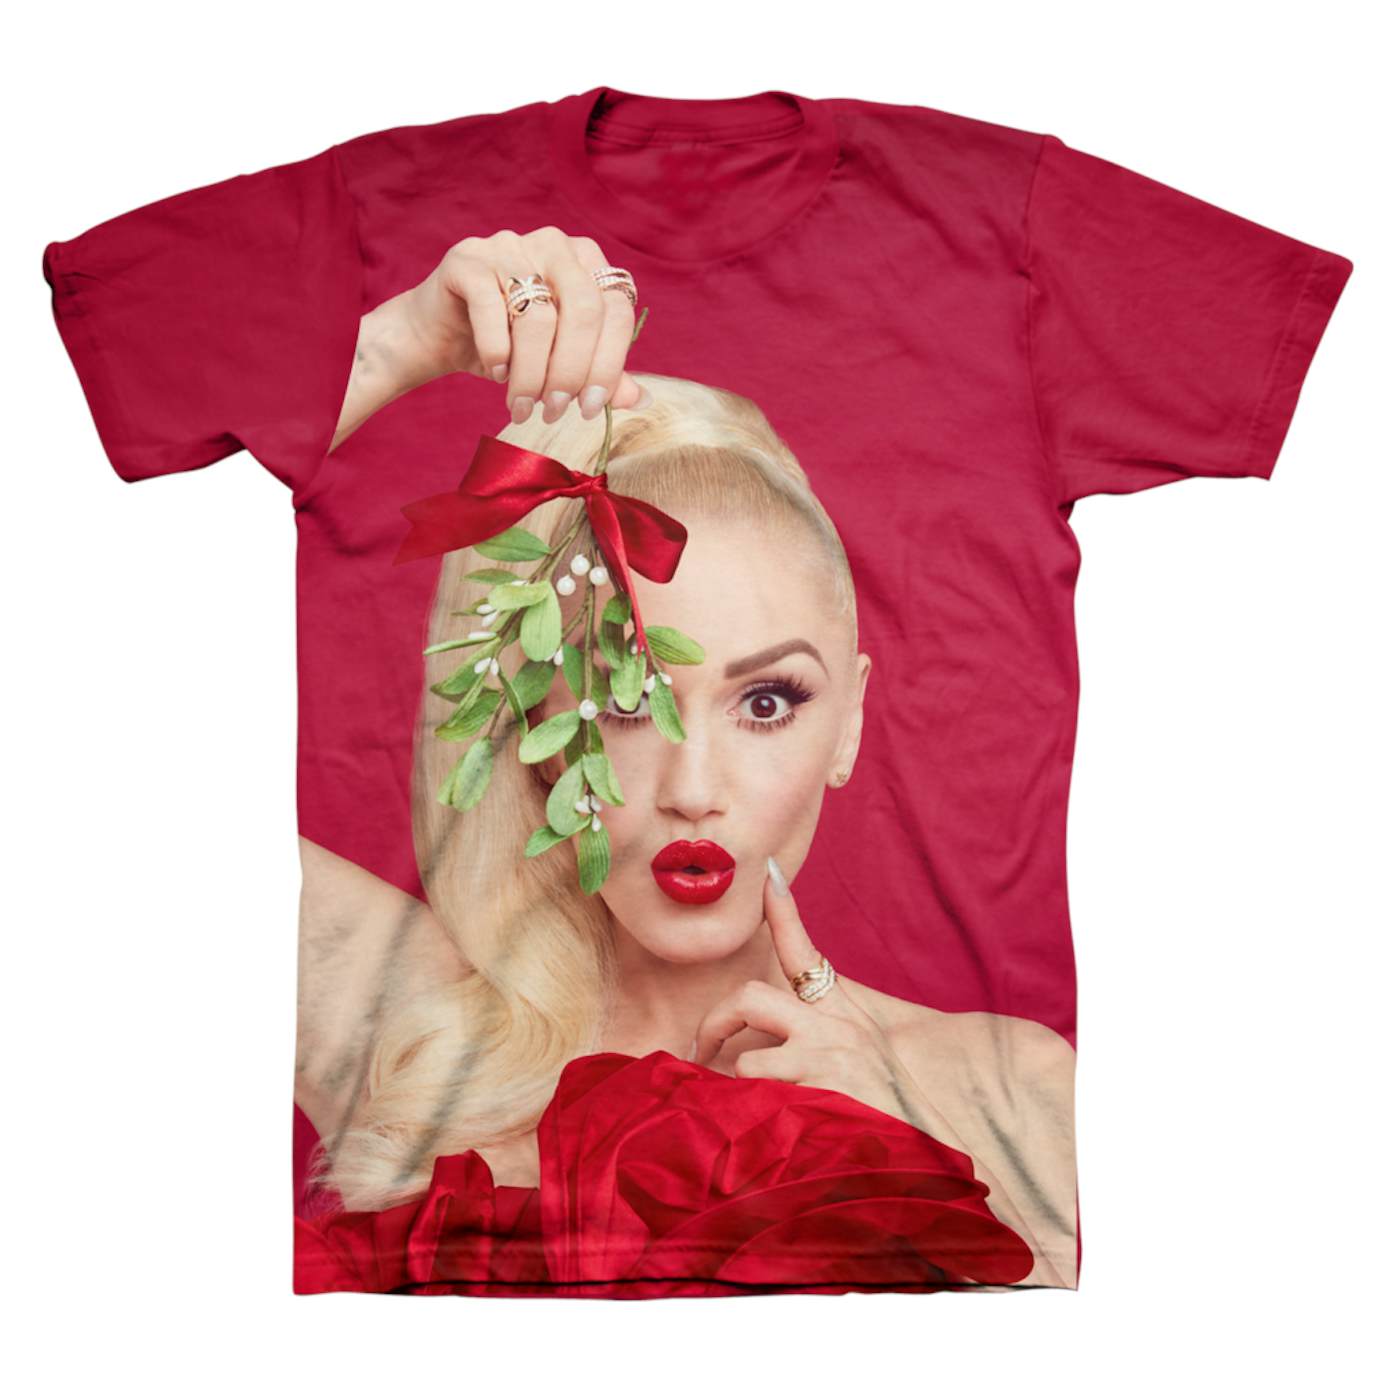 Gwen Stefani You Make It Feel Like Christmas Tee